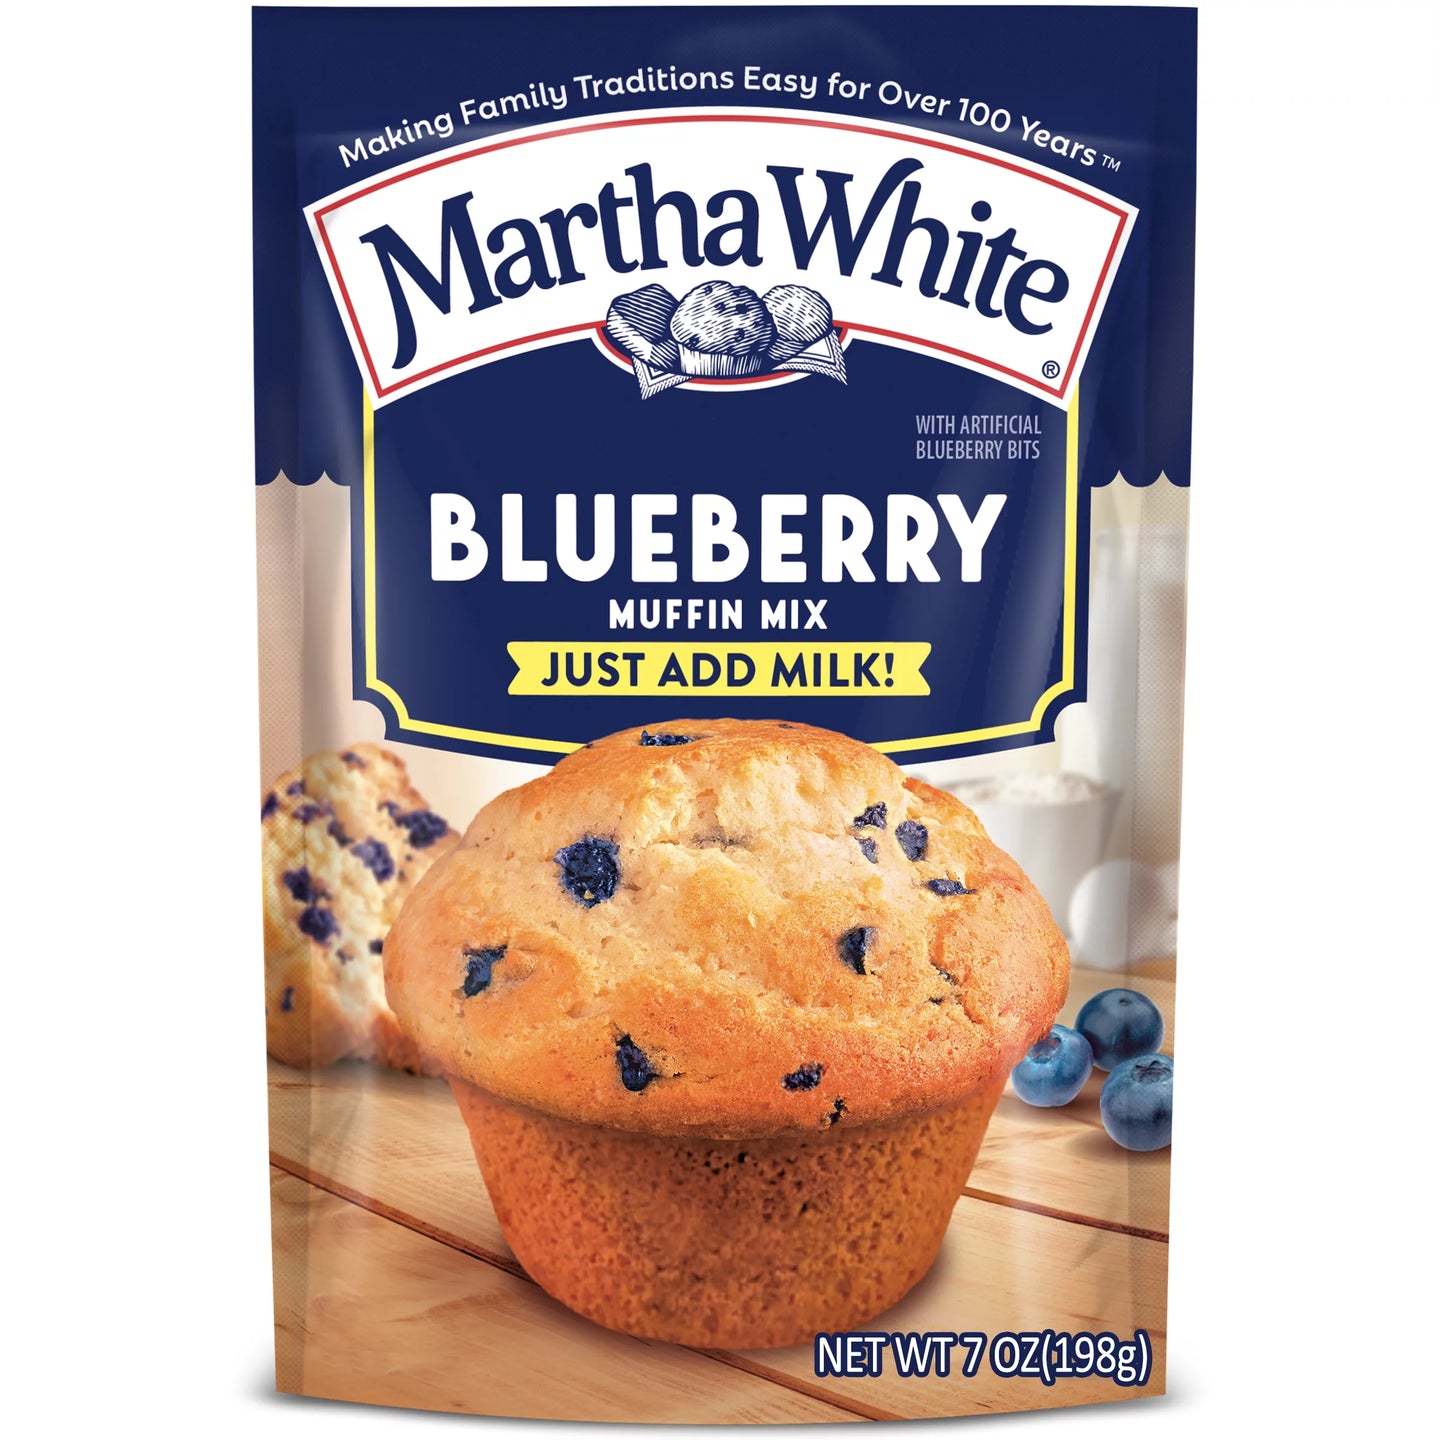 Blueberry Muffin Mix - Just Add Milk